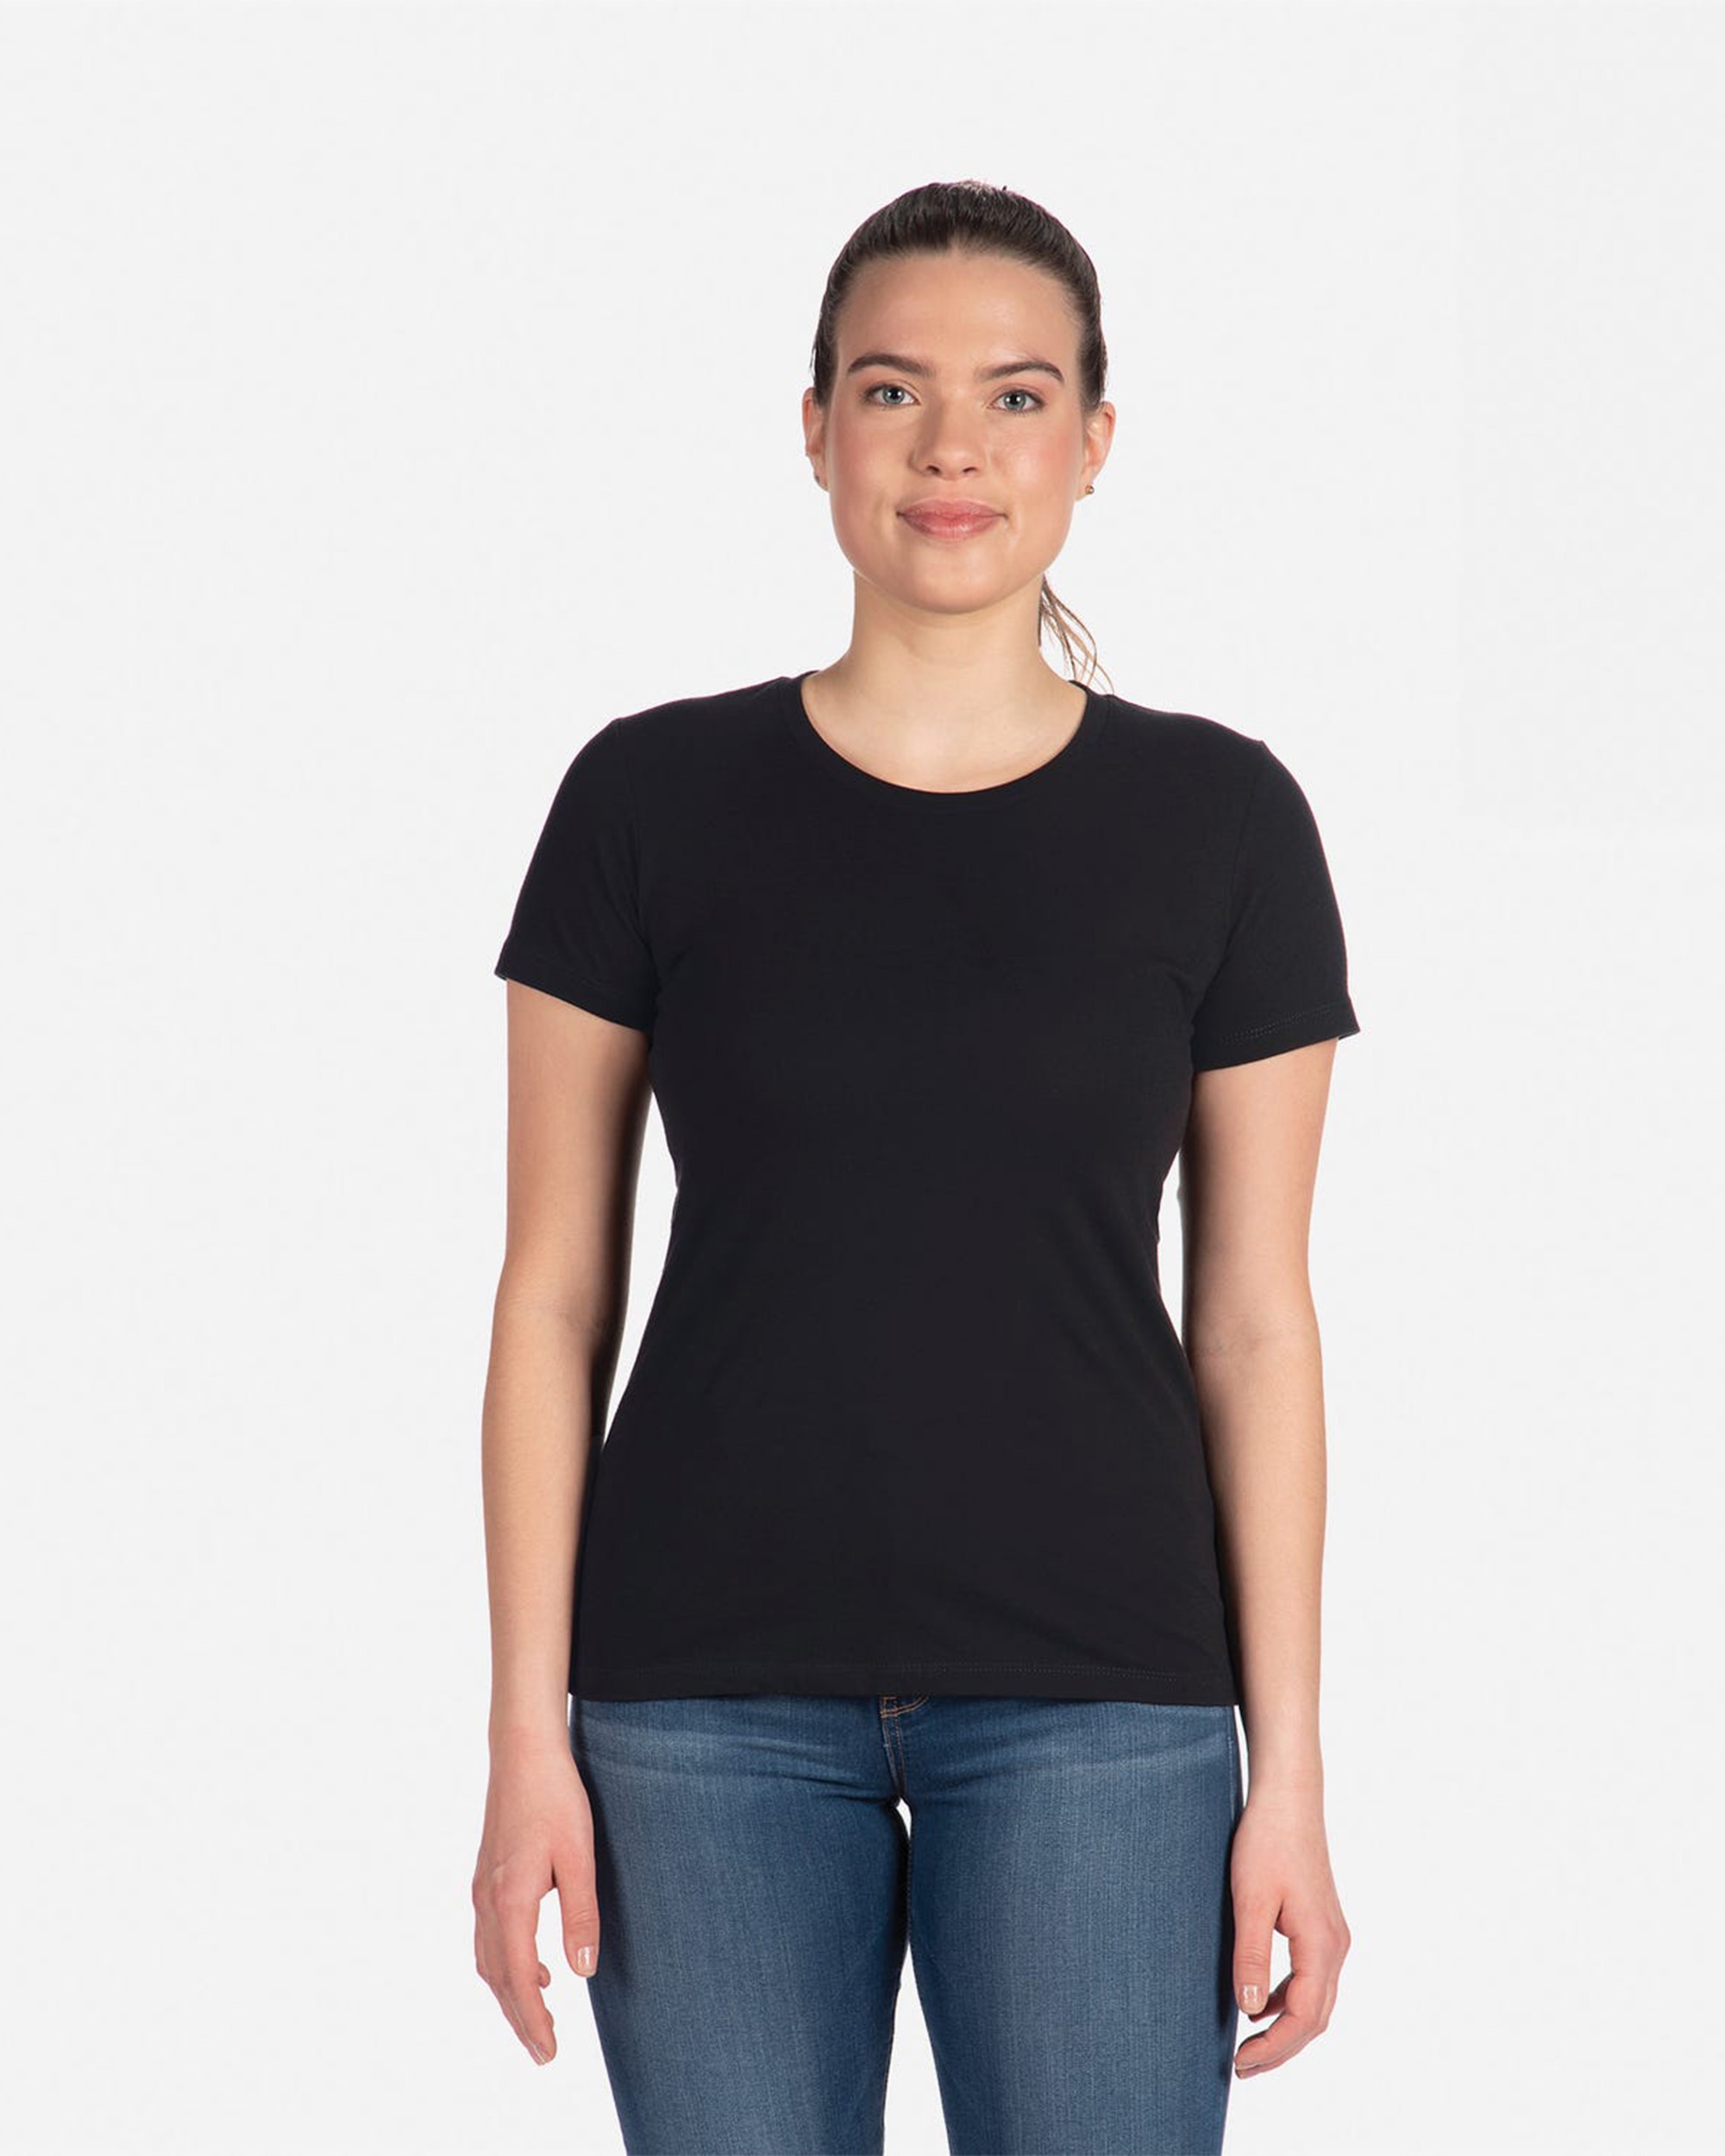 Next Level Apparel® 3900 Women's Boyfriend Cotton T-Shirt